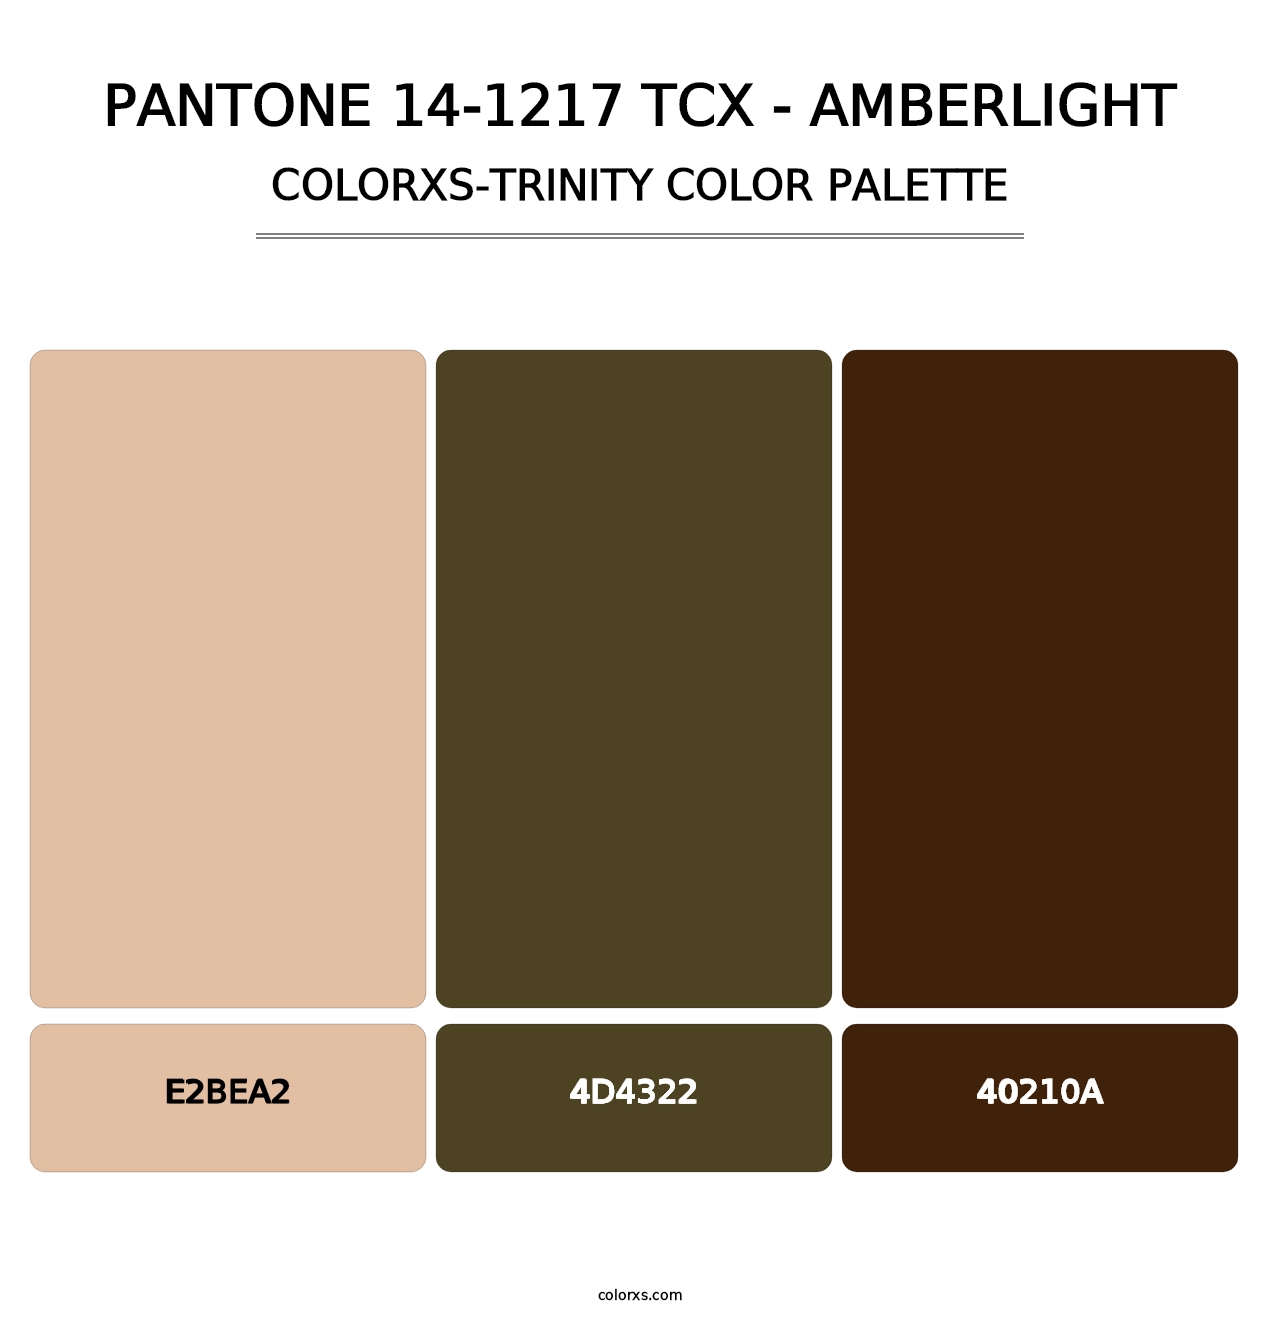 PANTONE 14-1217 TCX - Amberlight - Colorxs Trinity Palette